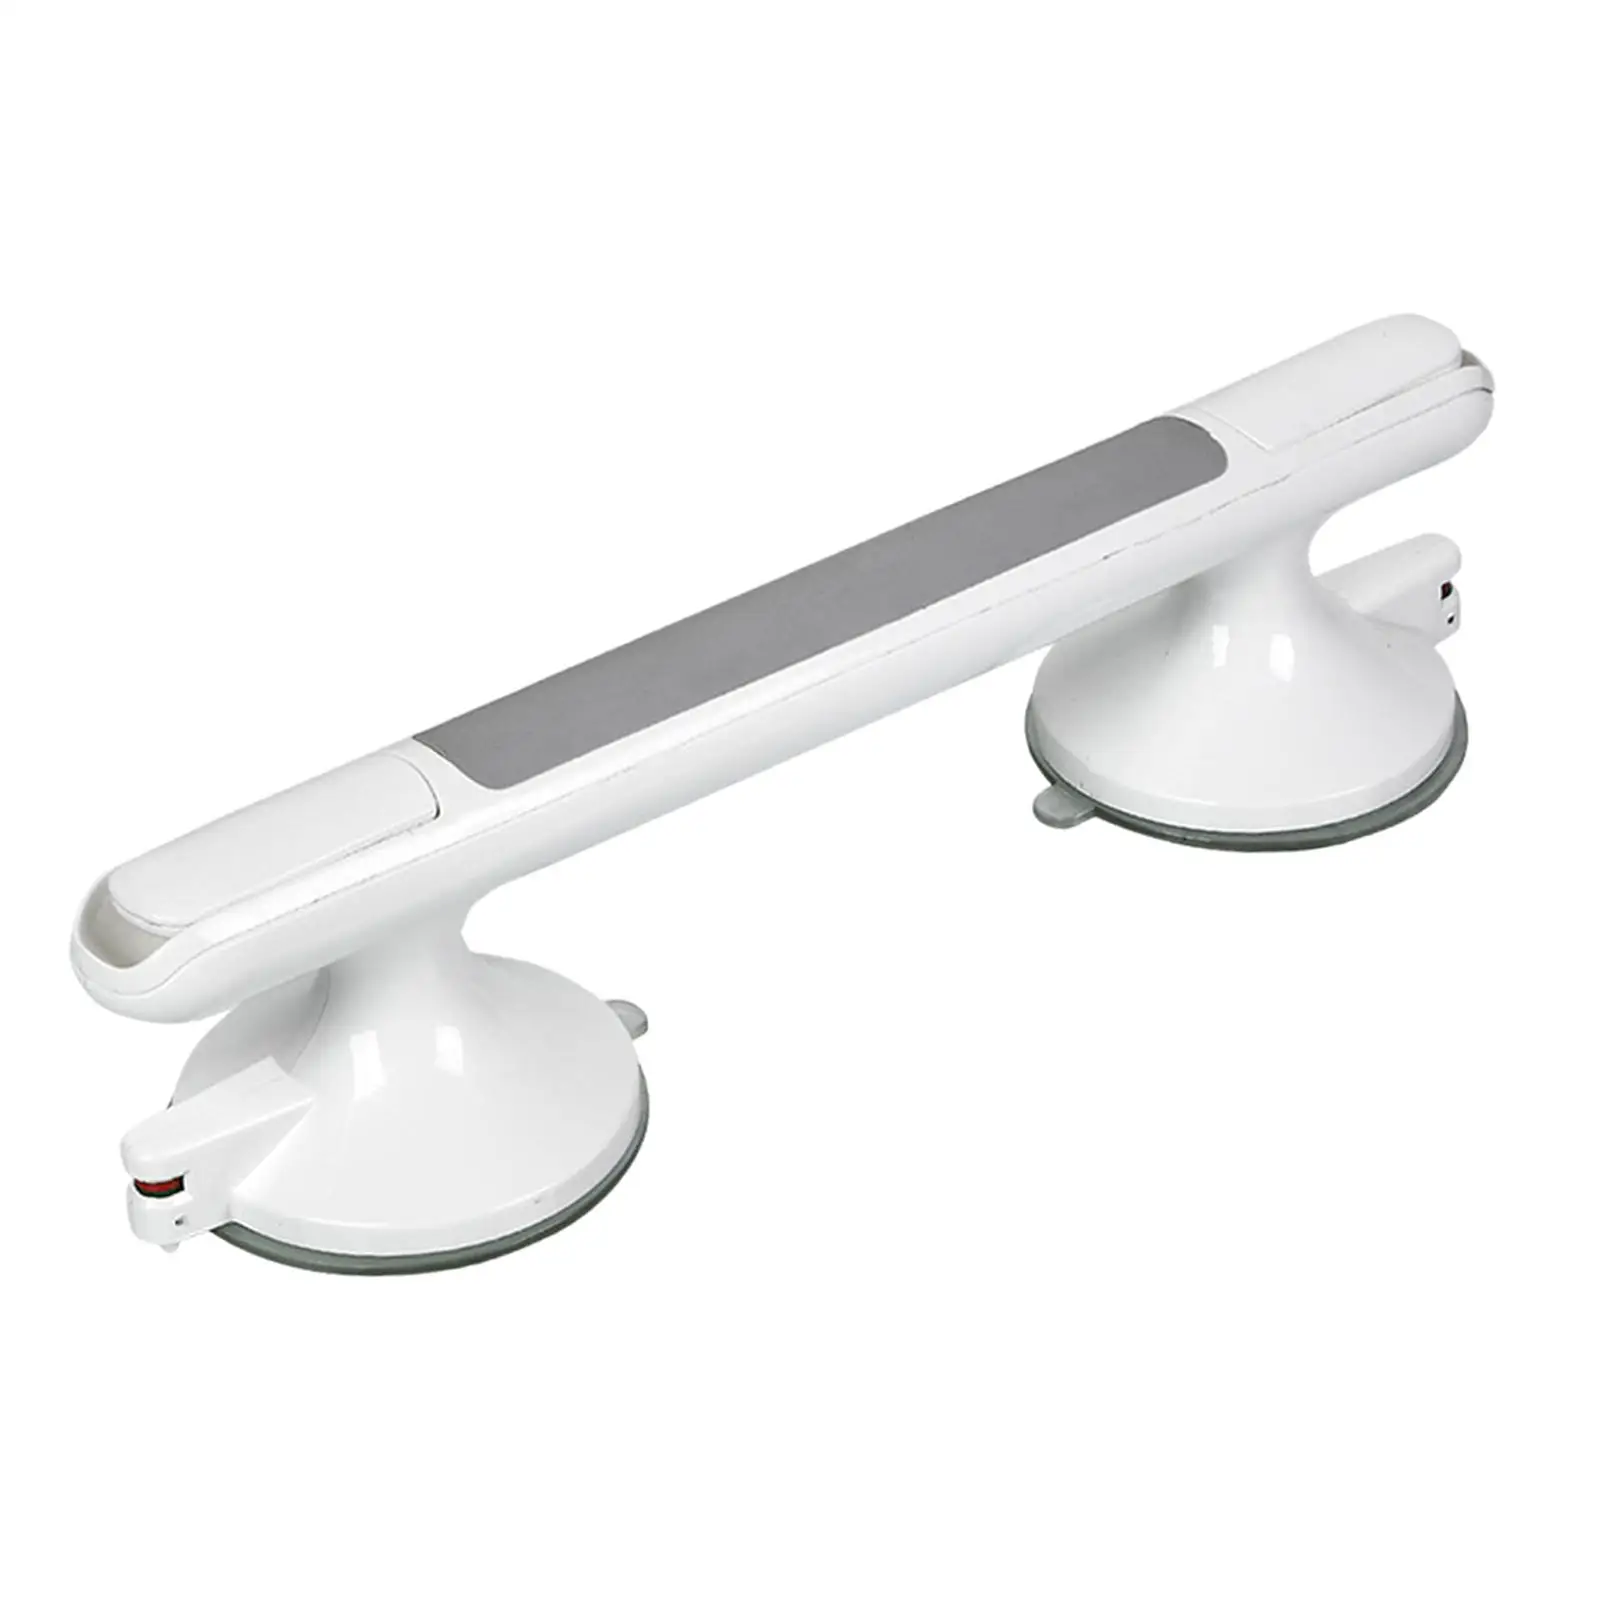 Suction Cup Grab Bars Stable Waterproof Anti Slip No Drill Balance Bar Assist Handle for Bathtubs Shower Bathroom Toilet Men